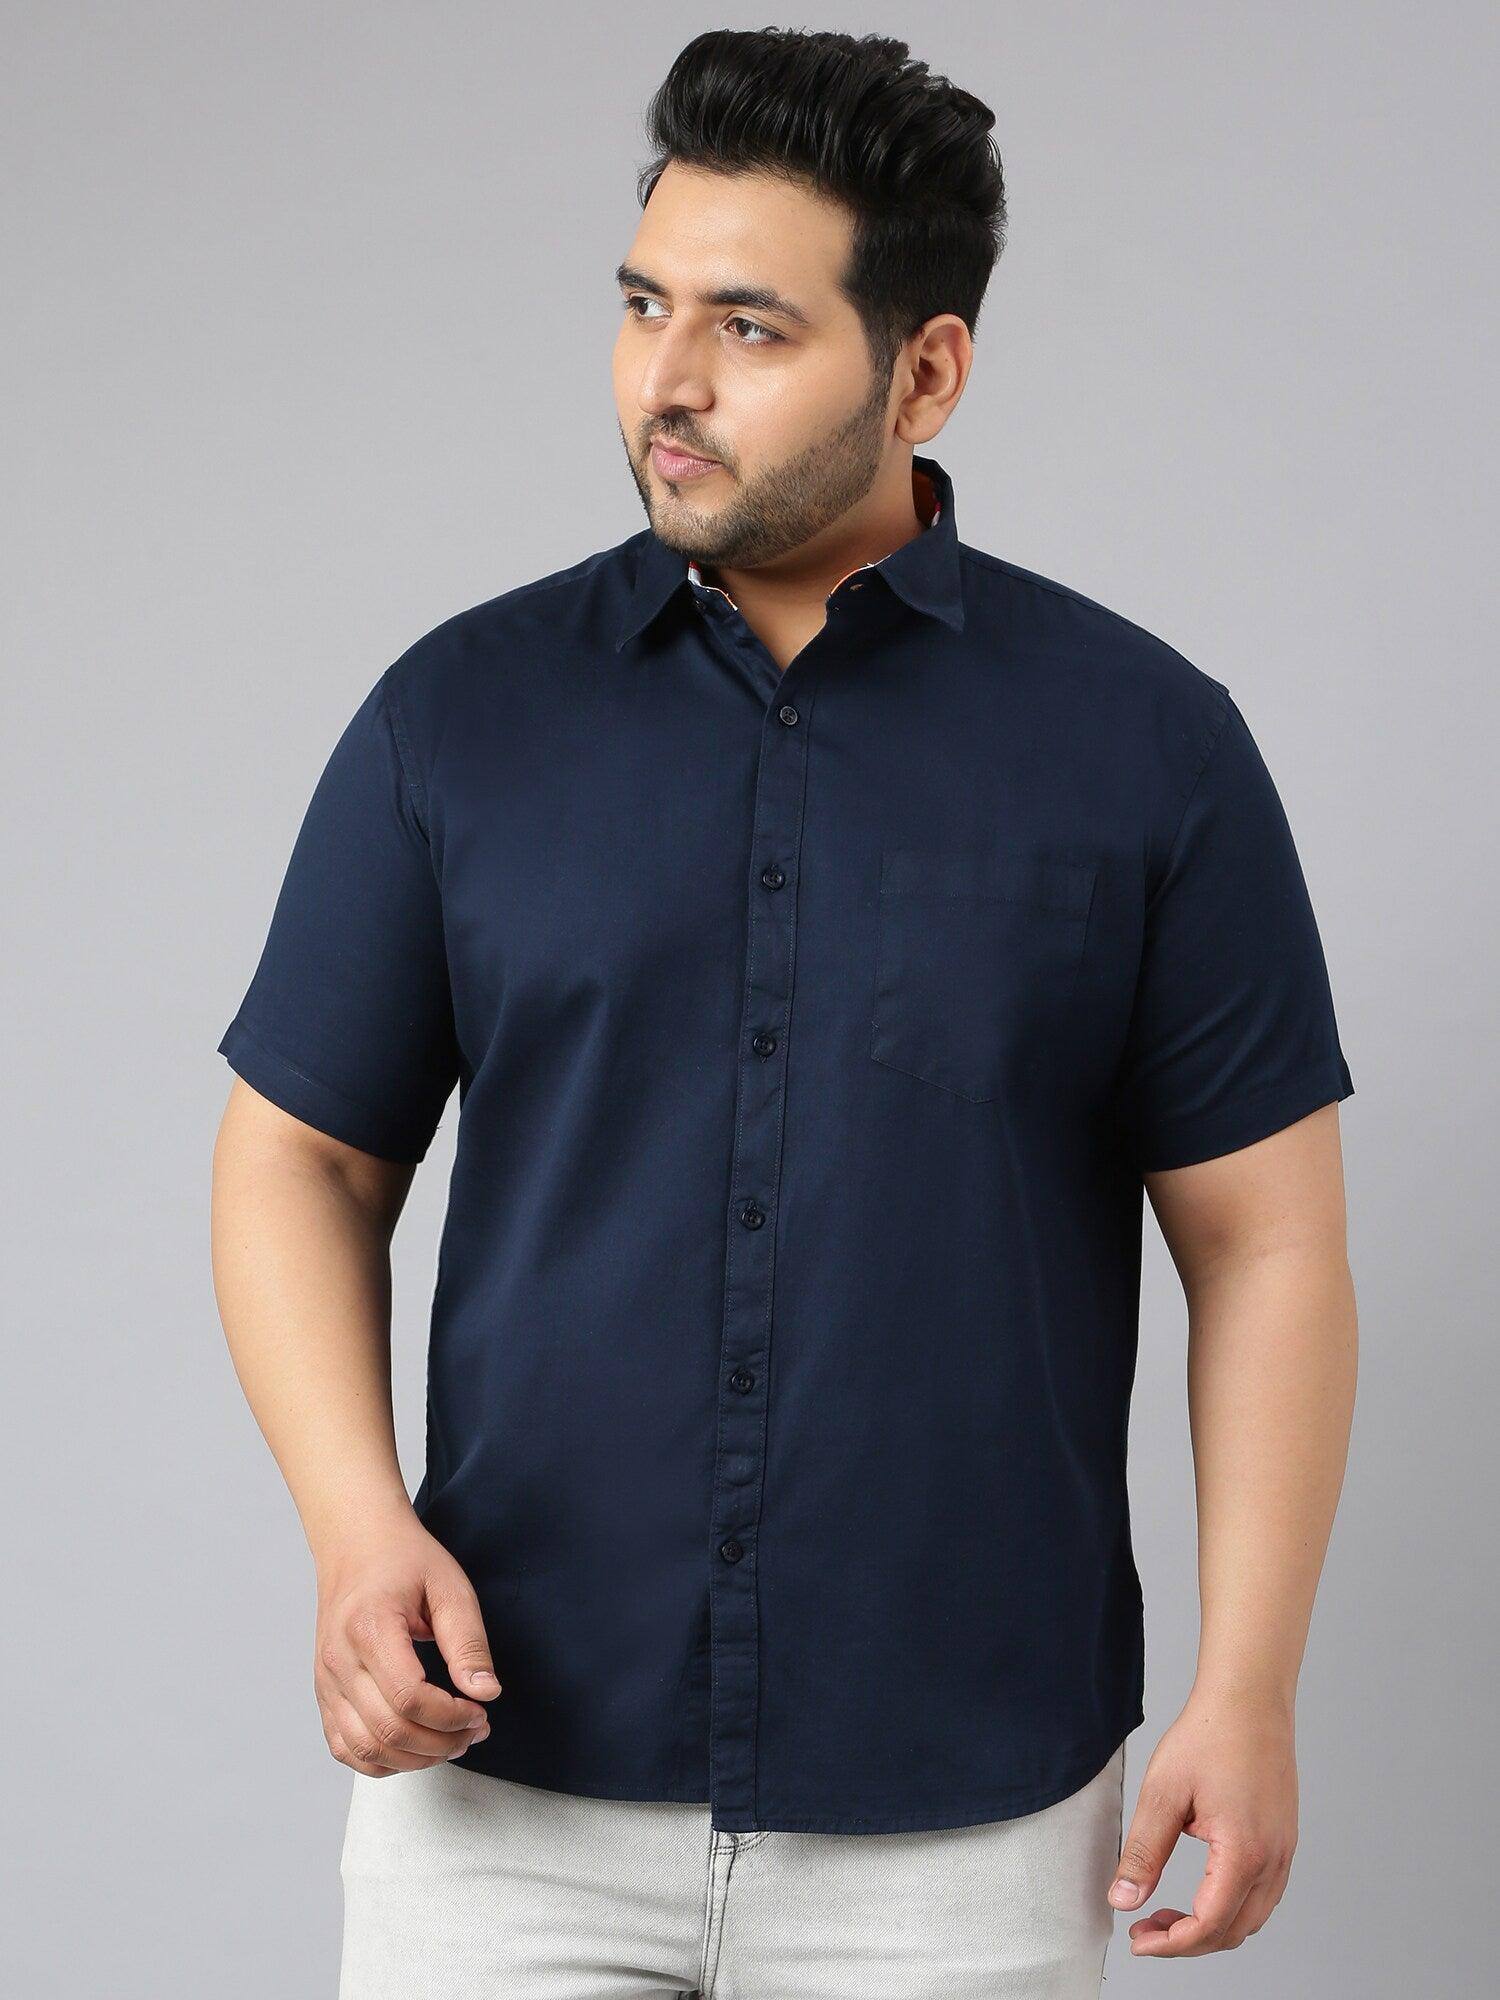 Indigo Blue Pure Cotton Half Sleeve Shirt Men's Plus Size - Guniaa Fashions